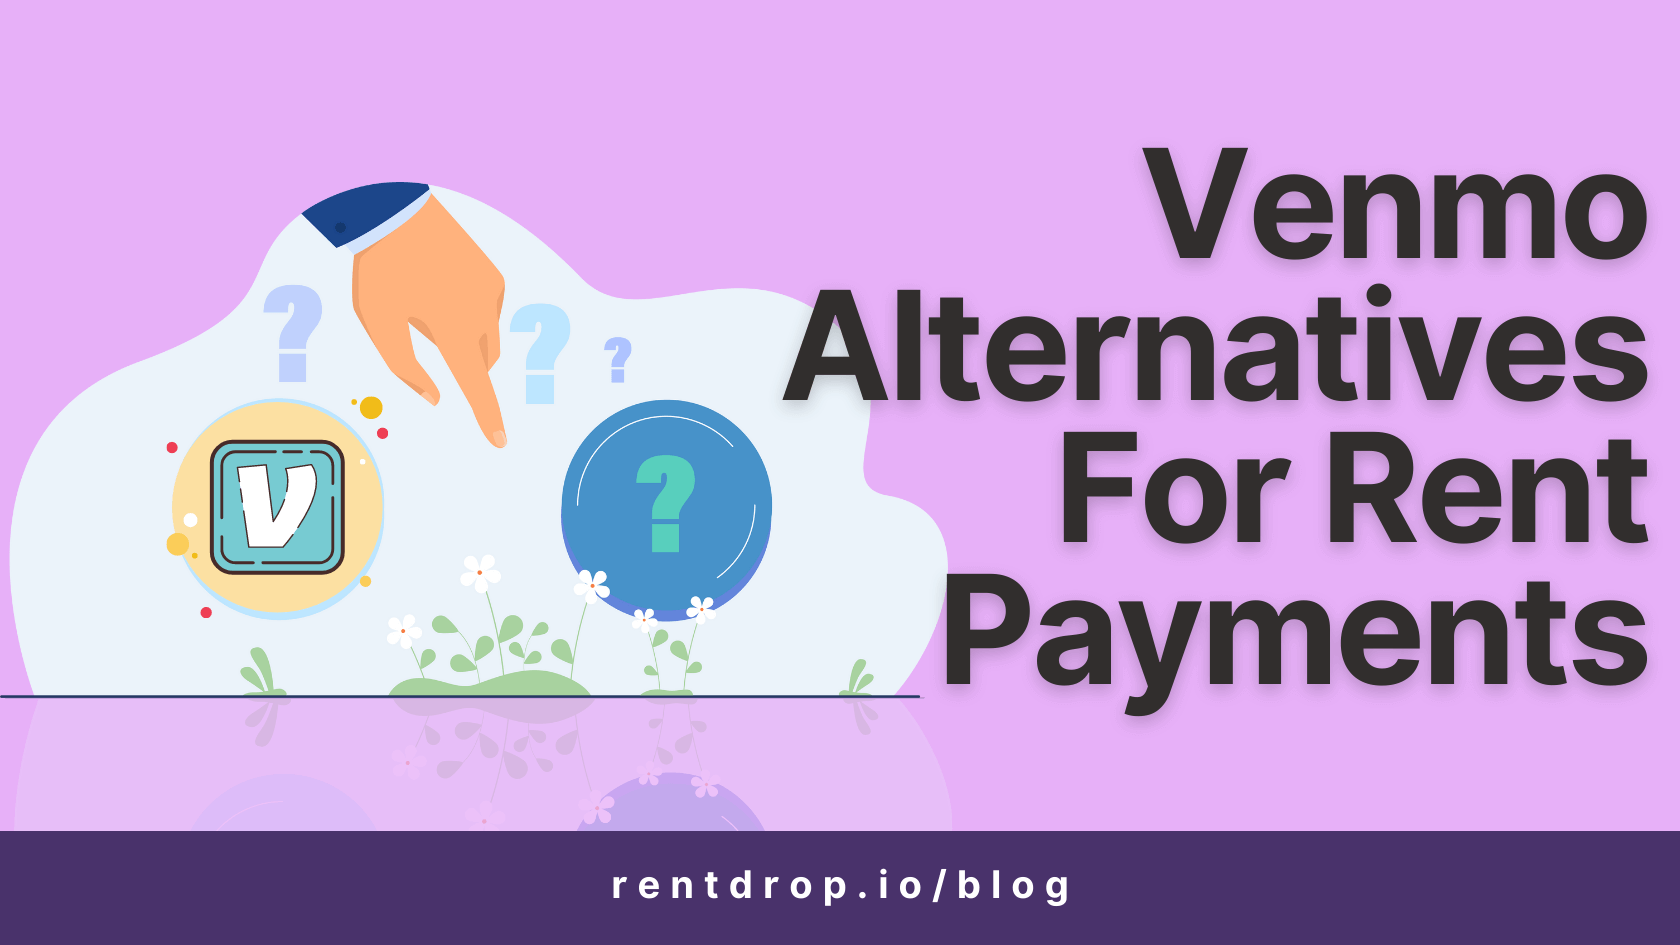 Venmo Alternatives For Rent Payments Rentdrop